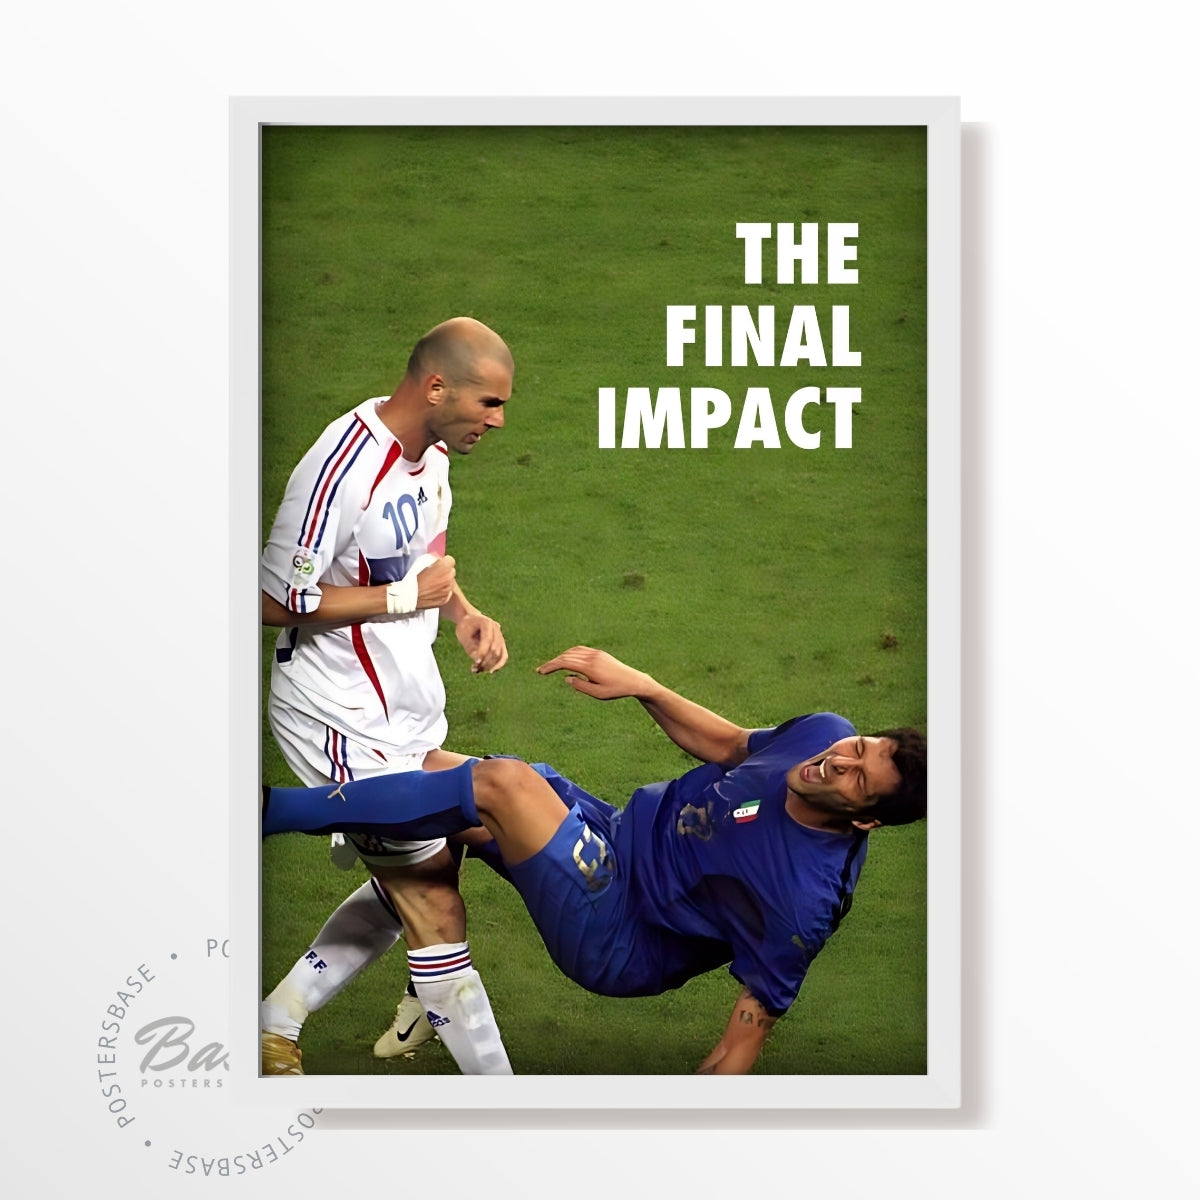 Zidane Vs. Materazzi - The Final Impact